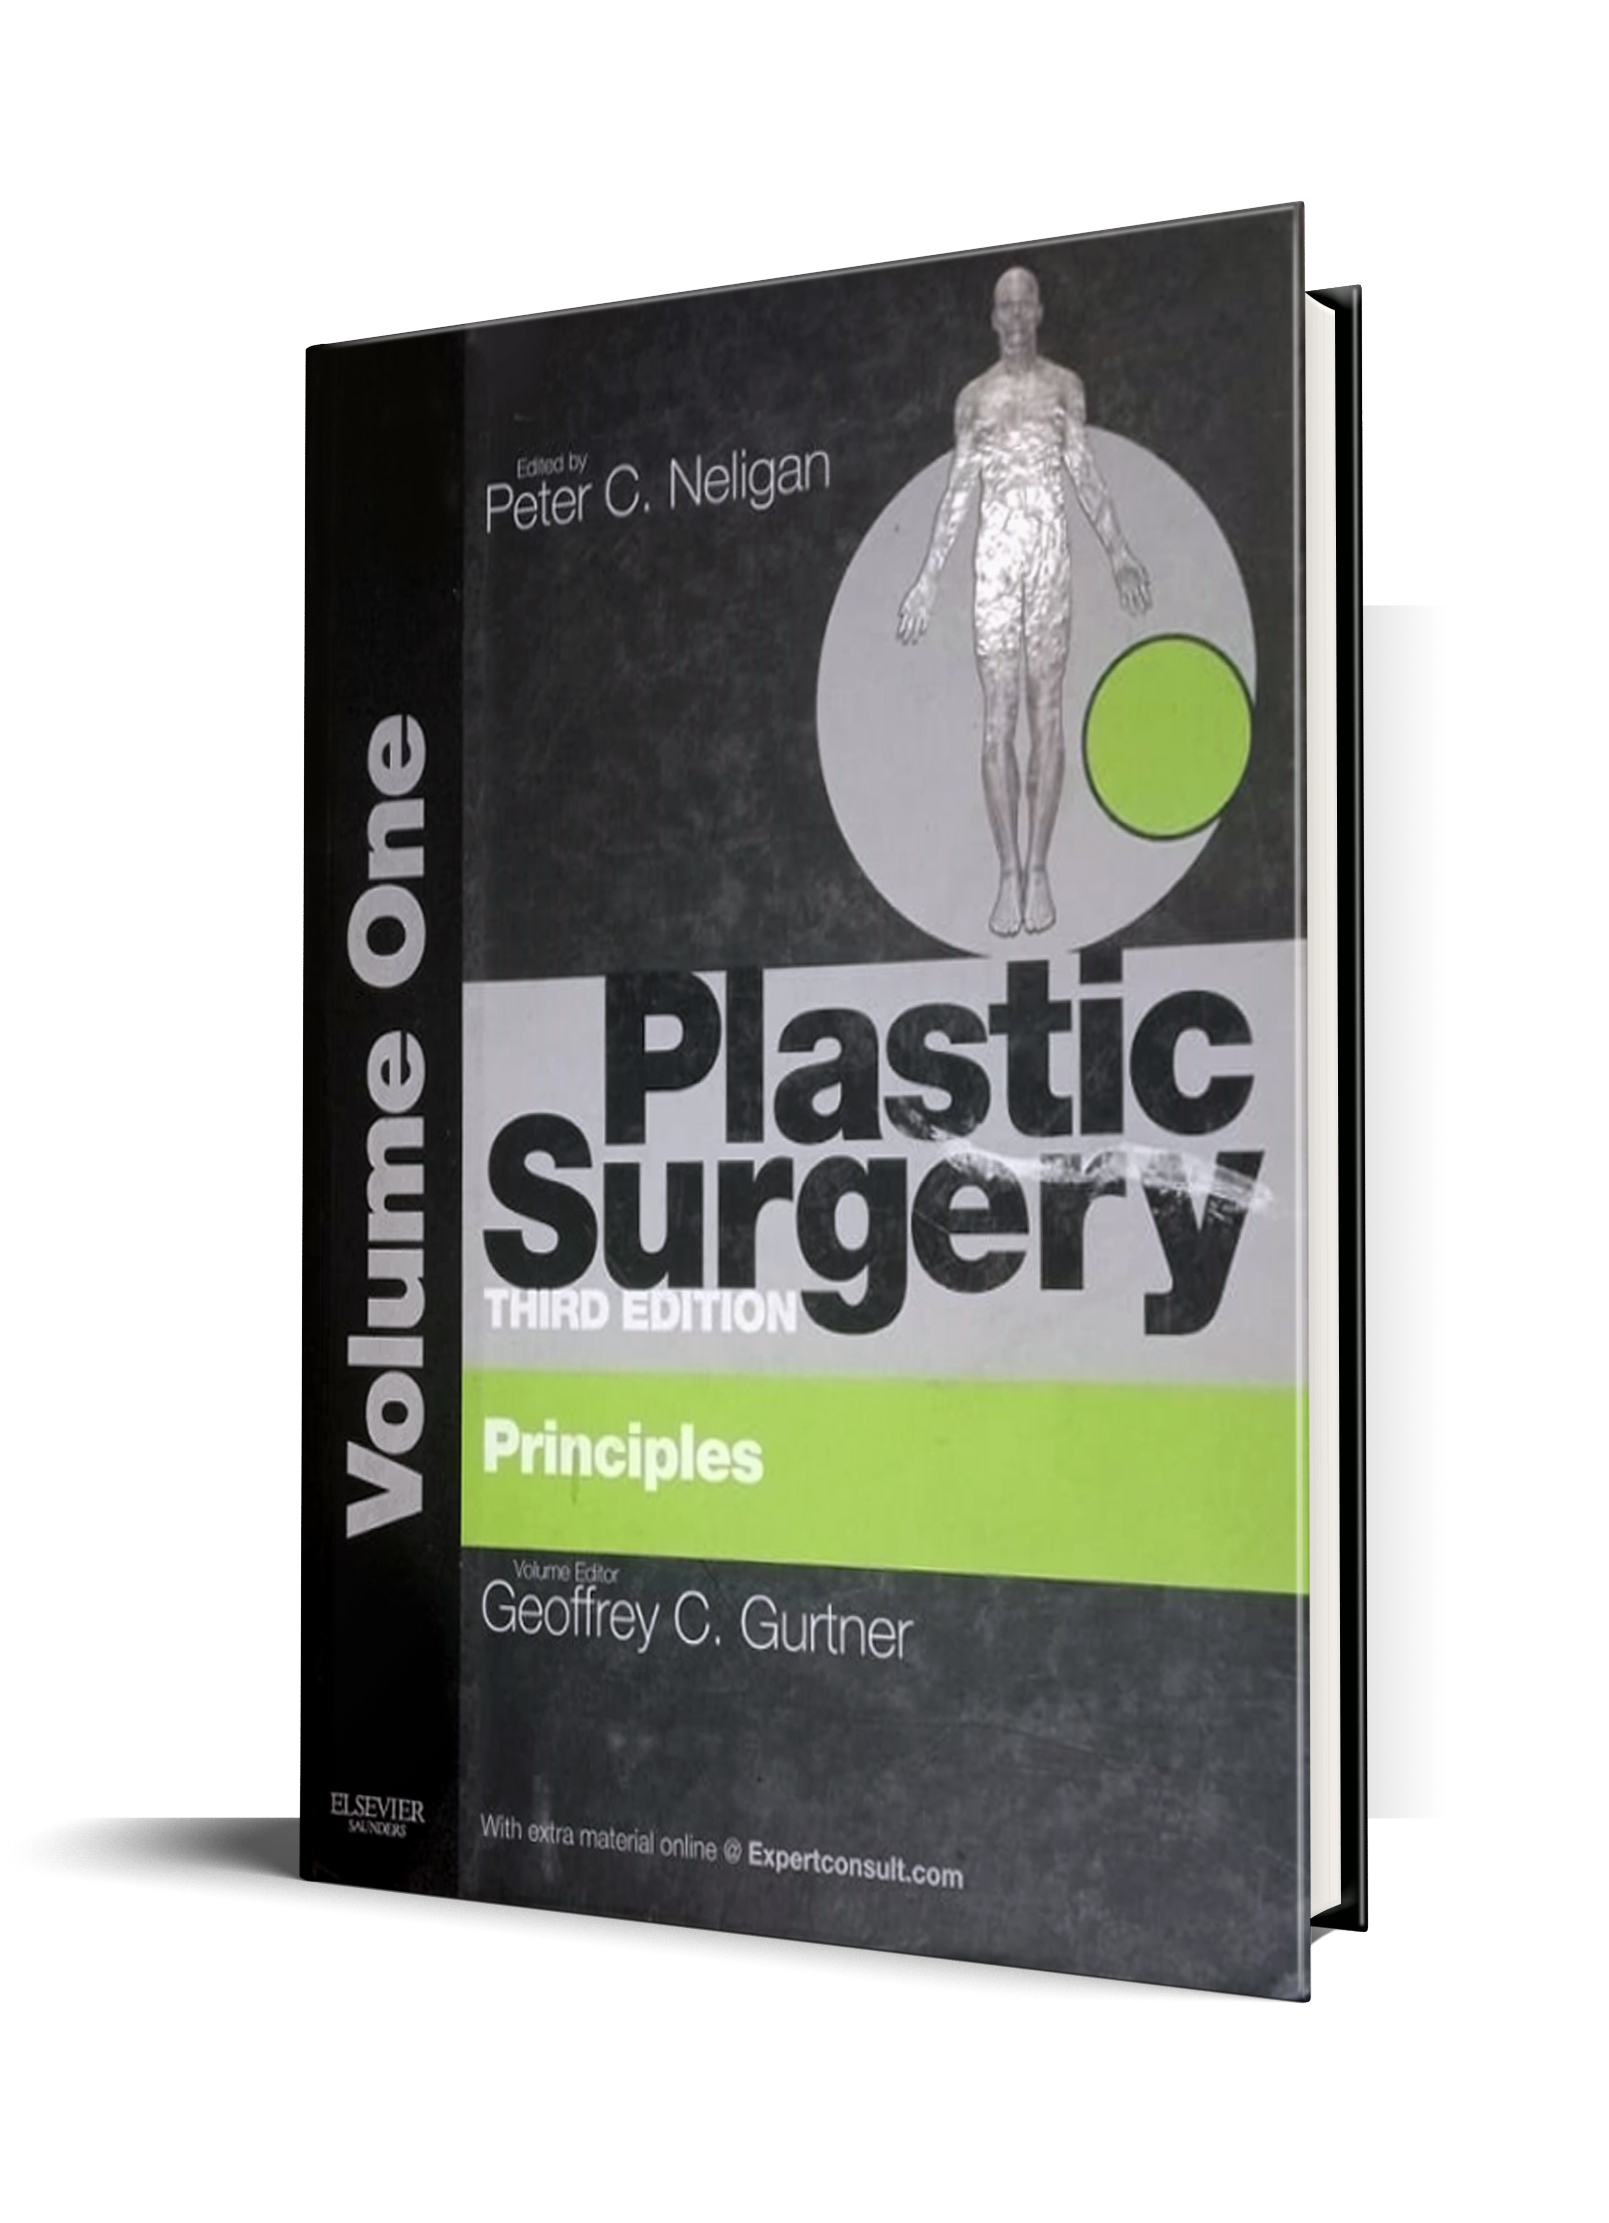 plastic surgery (third edition) set of six volume